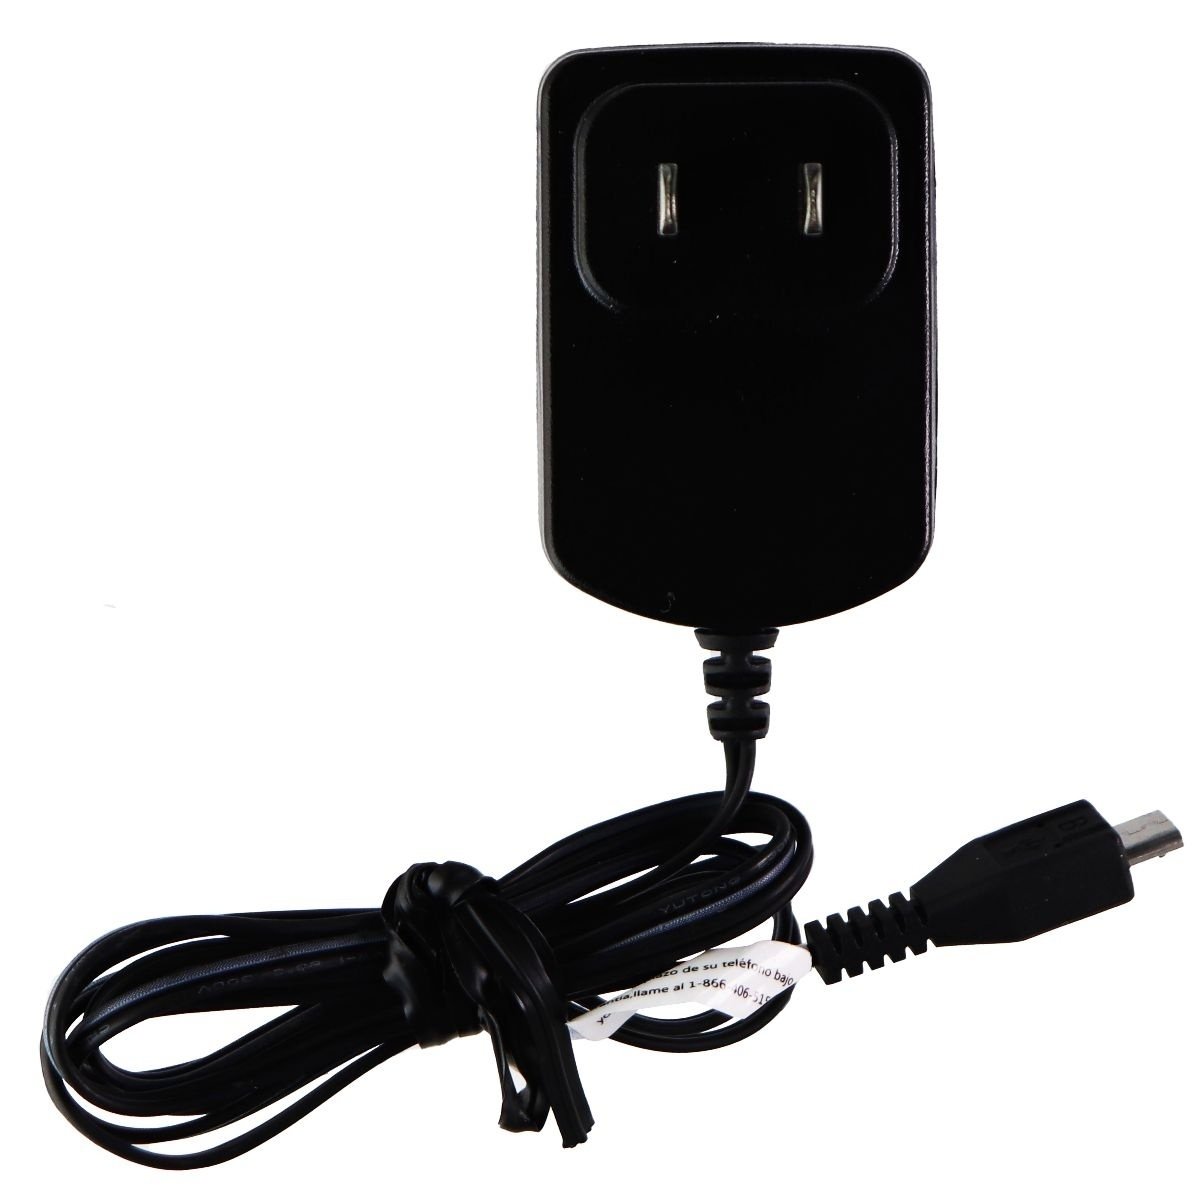 3-Ft Travel Charger (5V/550mA) Micro-USB Wall Adapter - Black (PA-5V550mA-005)